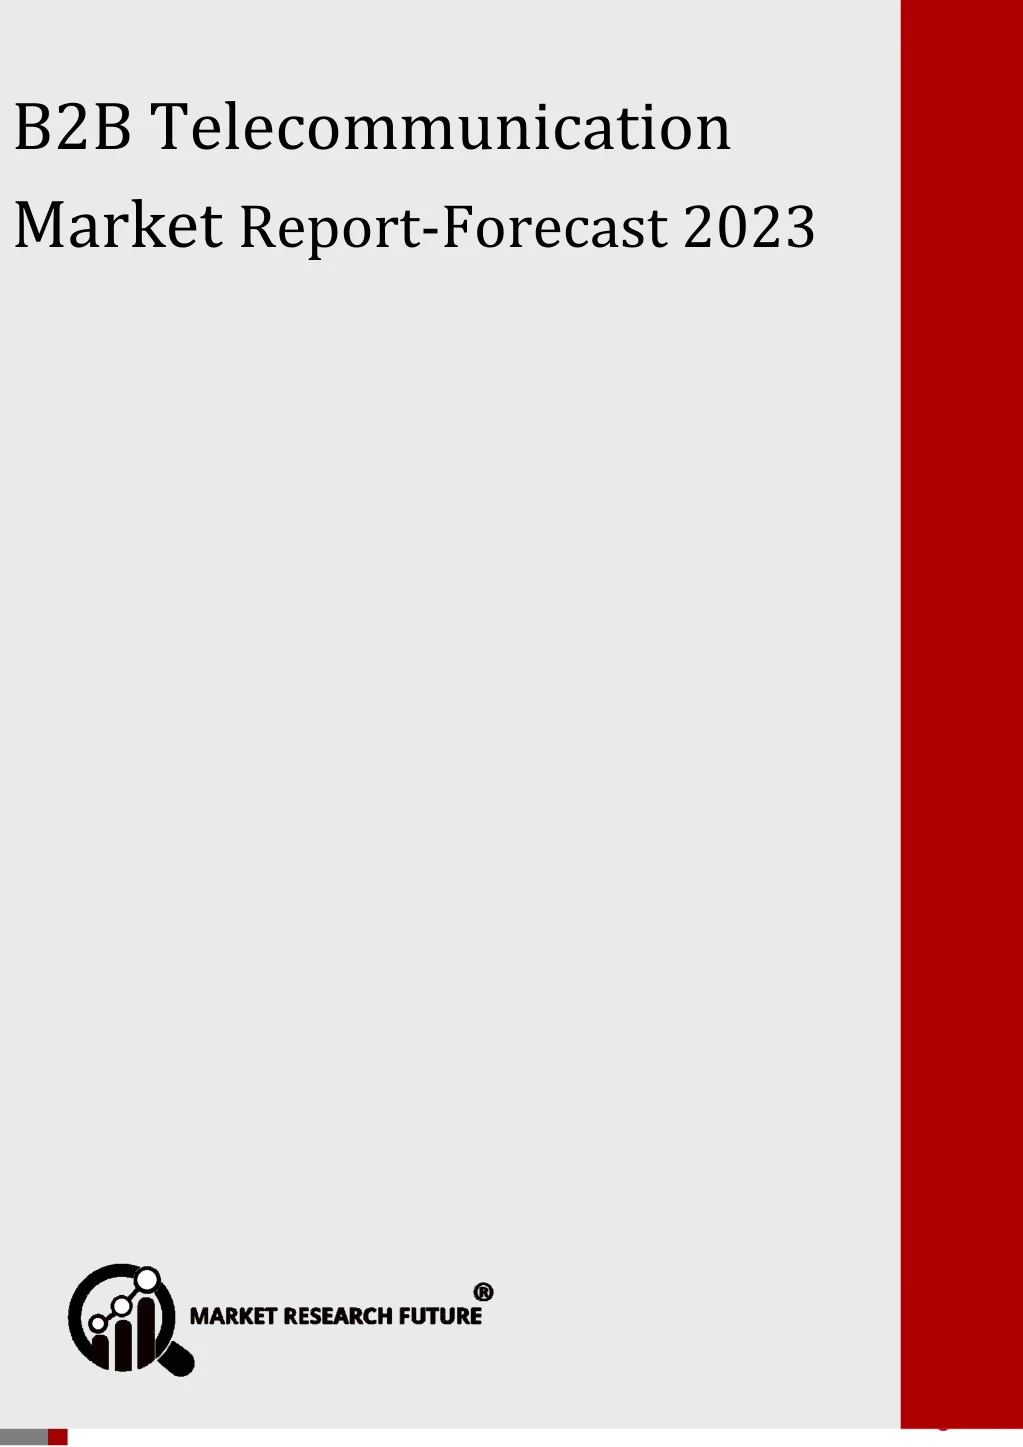 b2b telecommunication market report forecast 2023